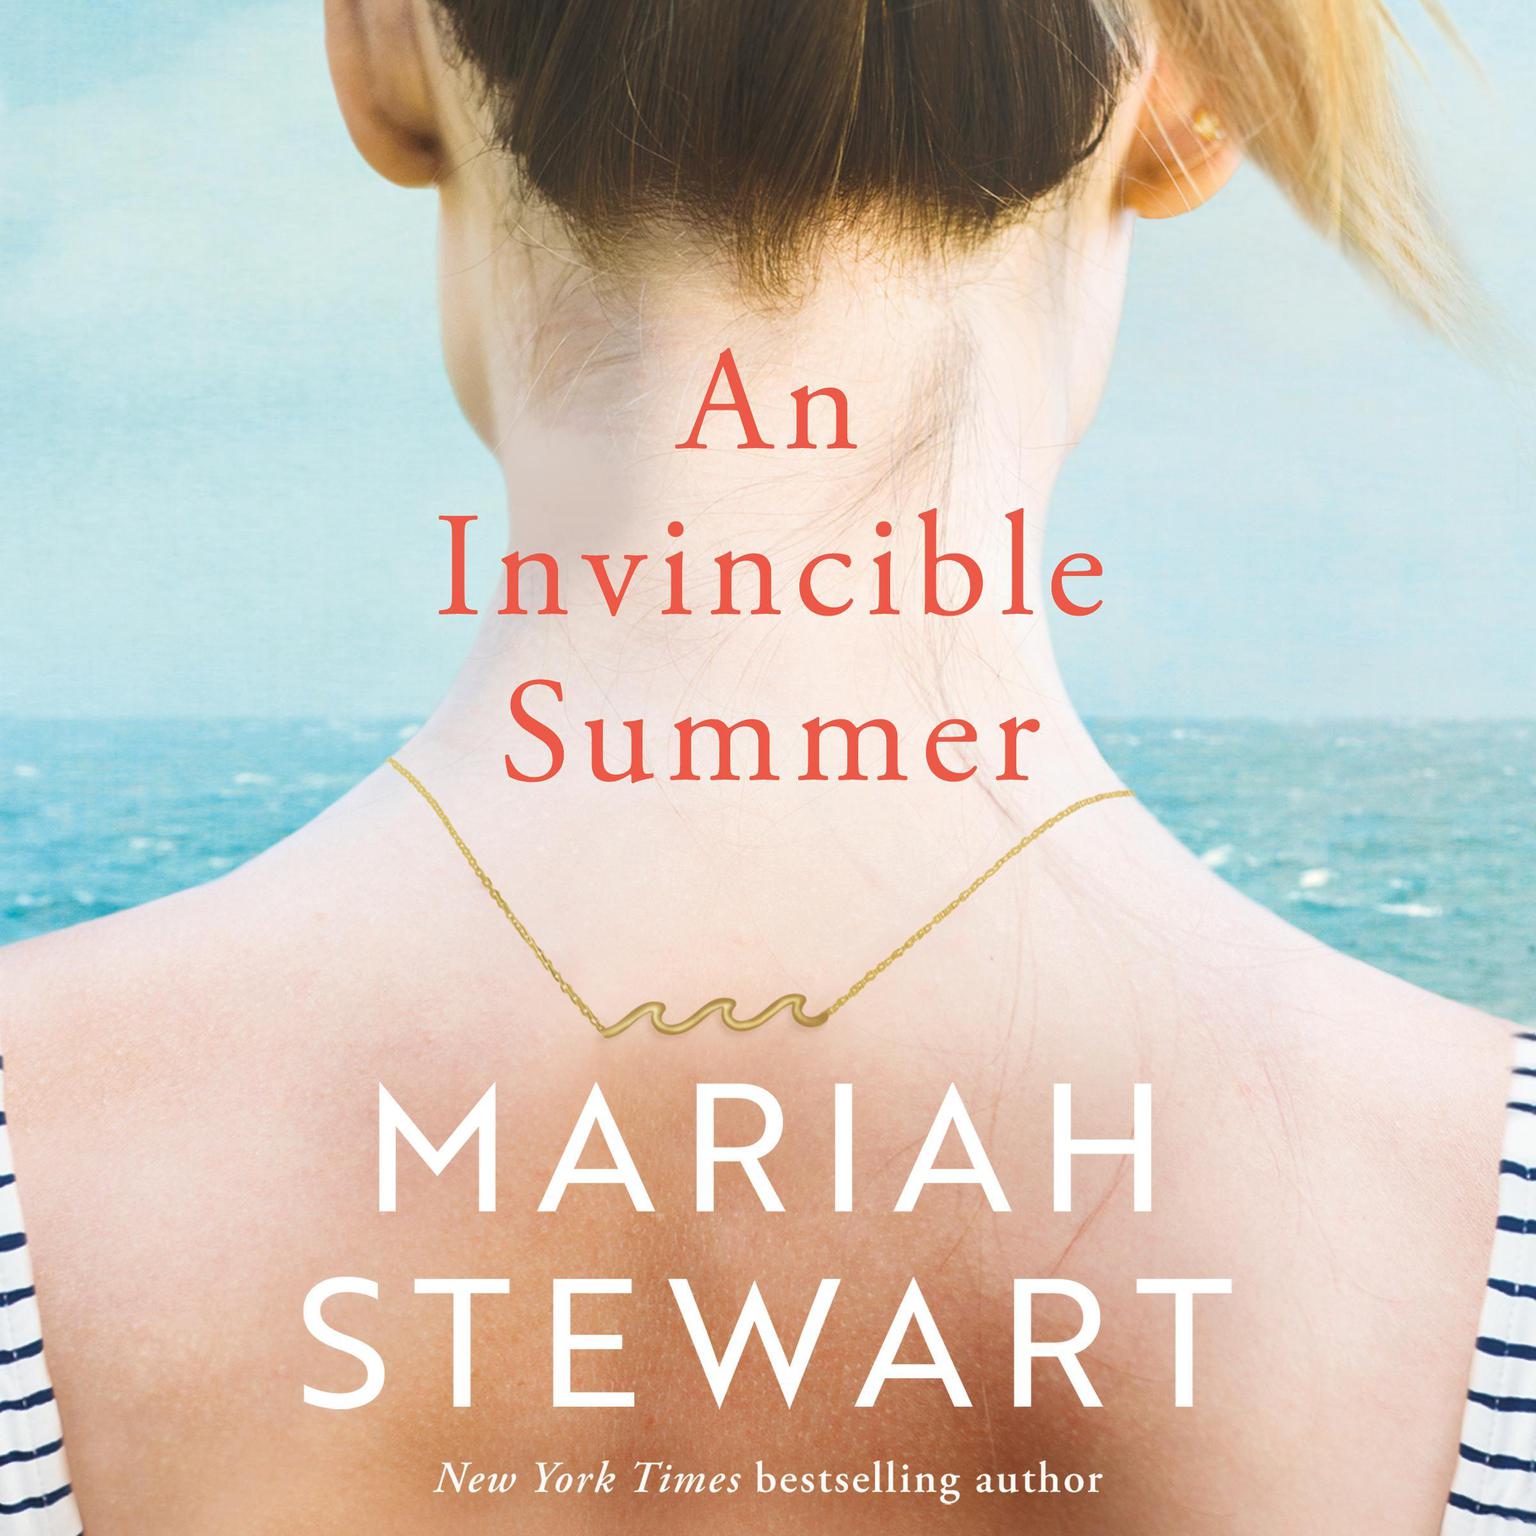 An Invincible Summer Audiobook, by Mariah Stewart